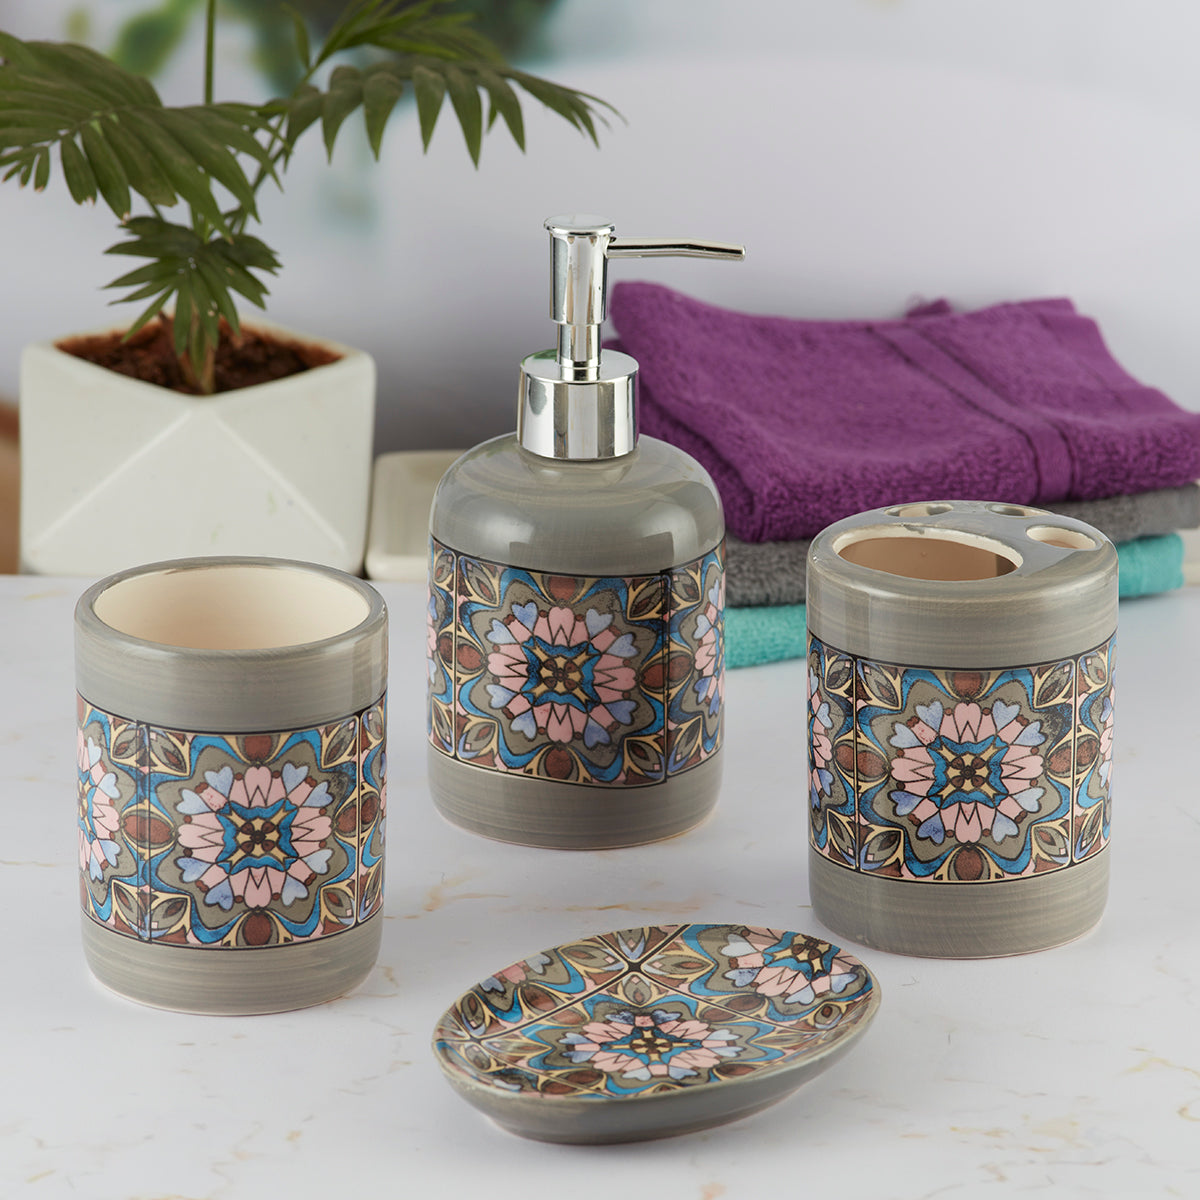 Ceramic Bathroom Set of 4 with Soap Dispenser (9732)